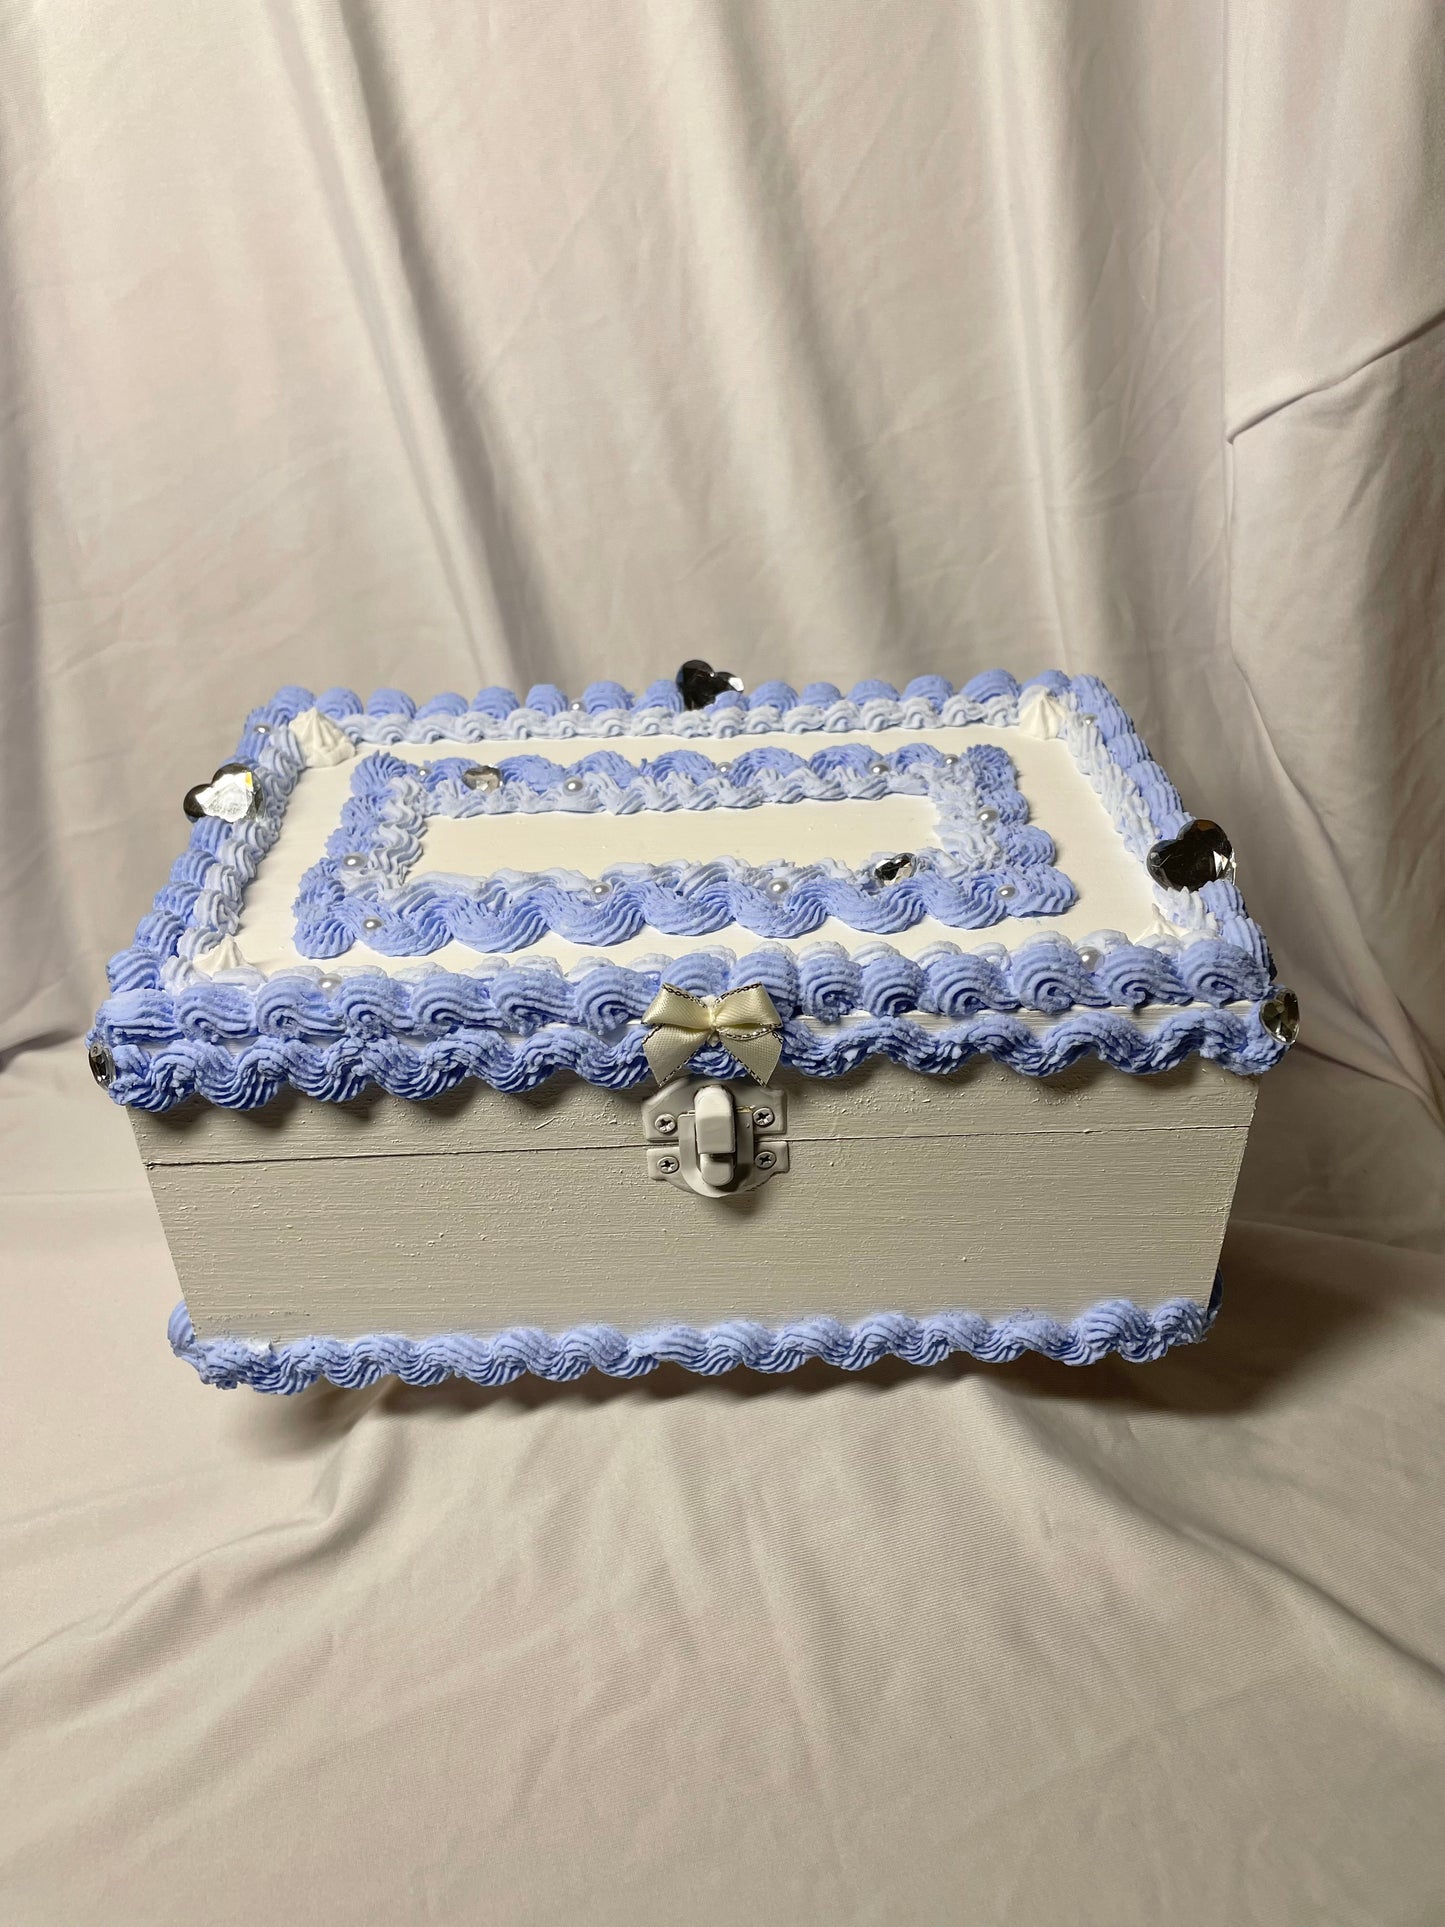 Baby blue & white wooden cake box